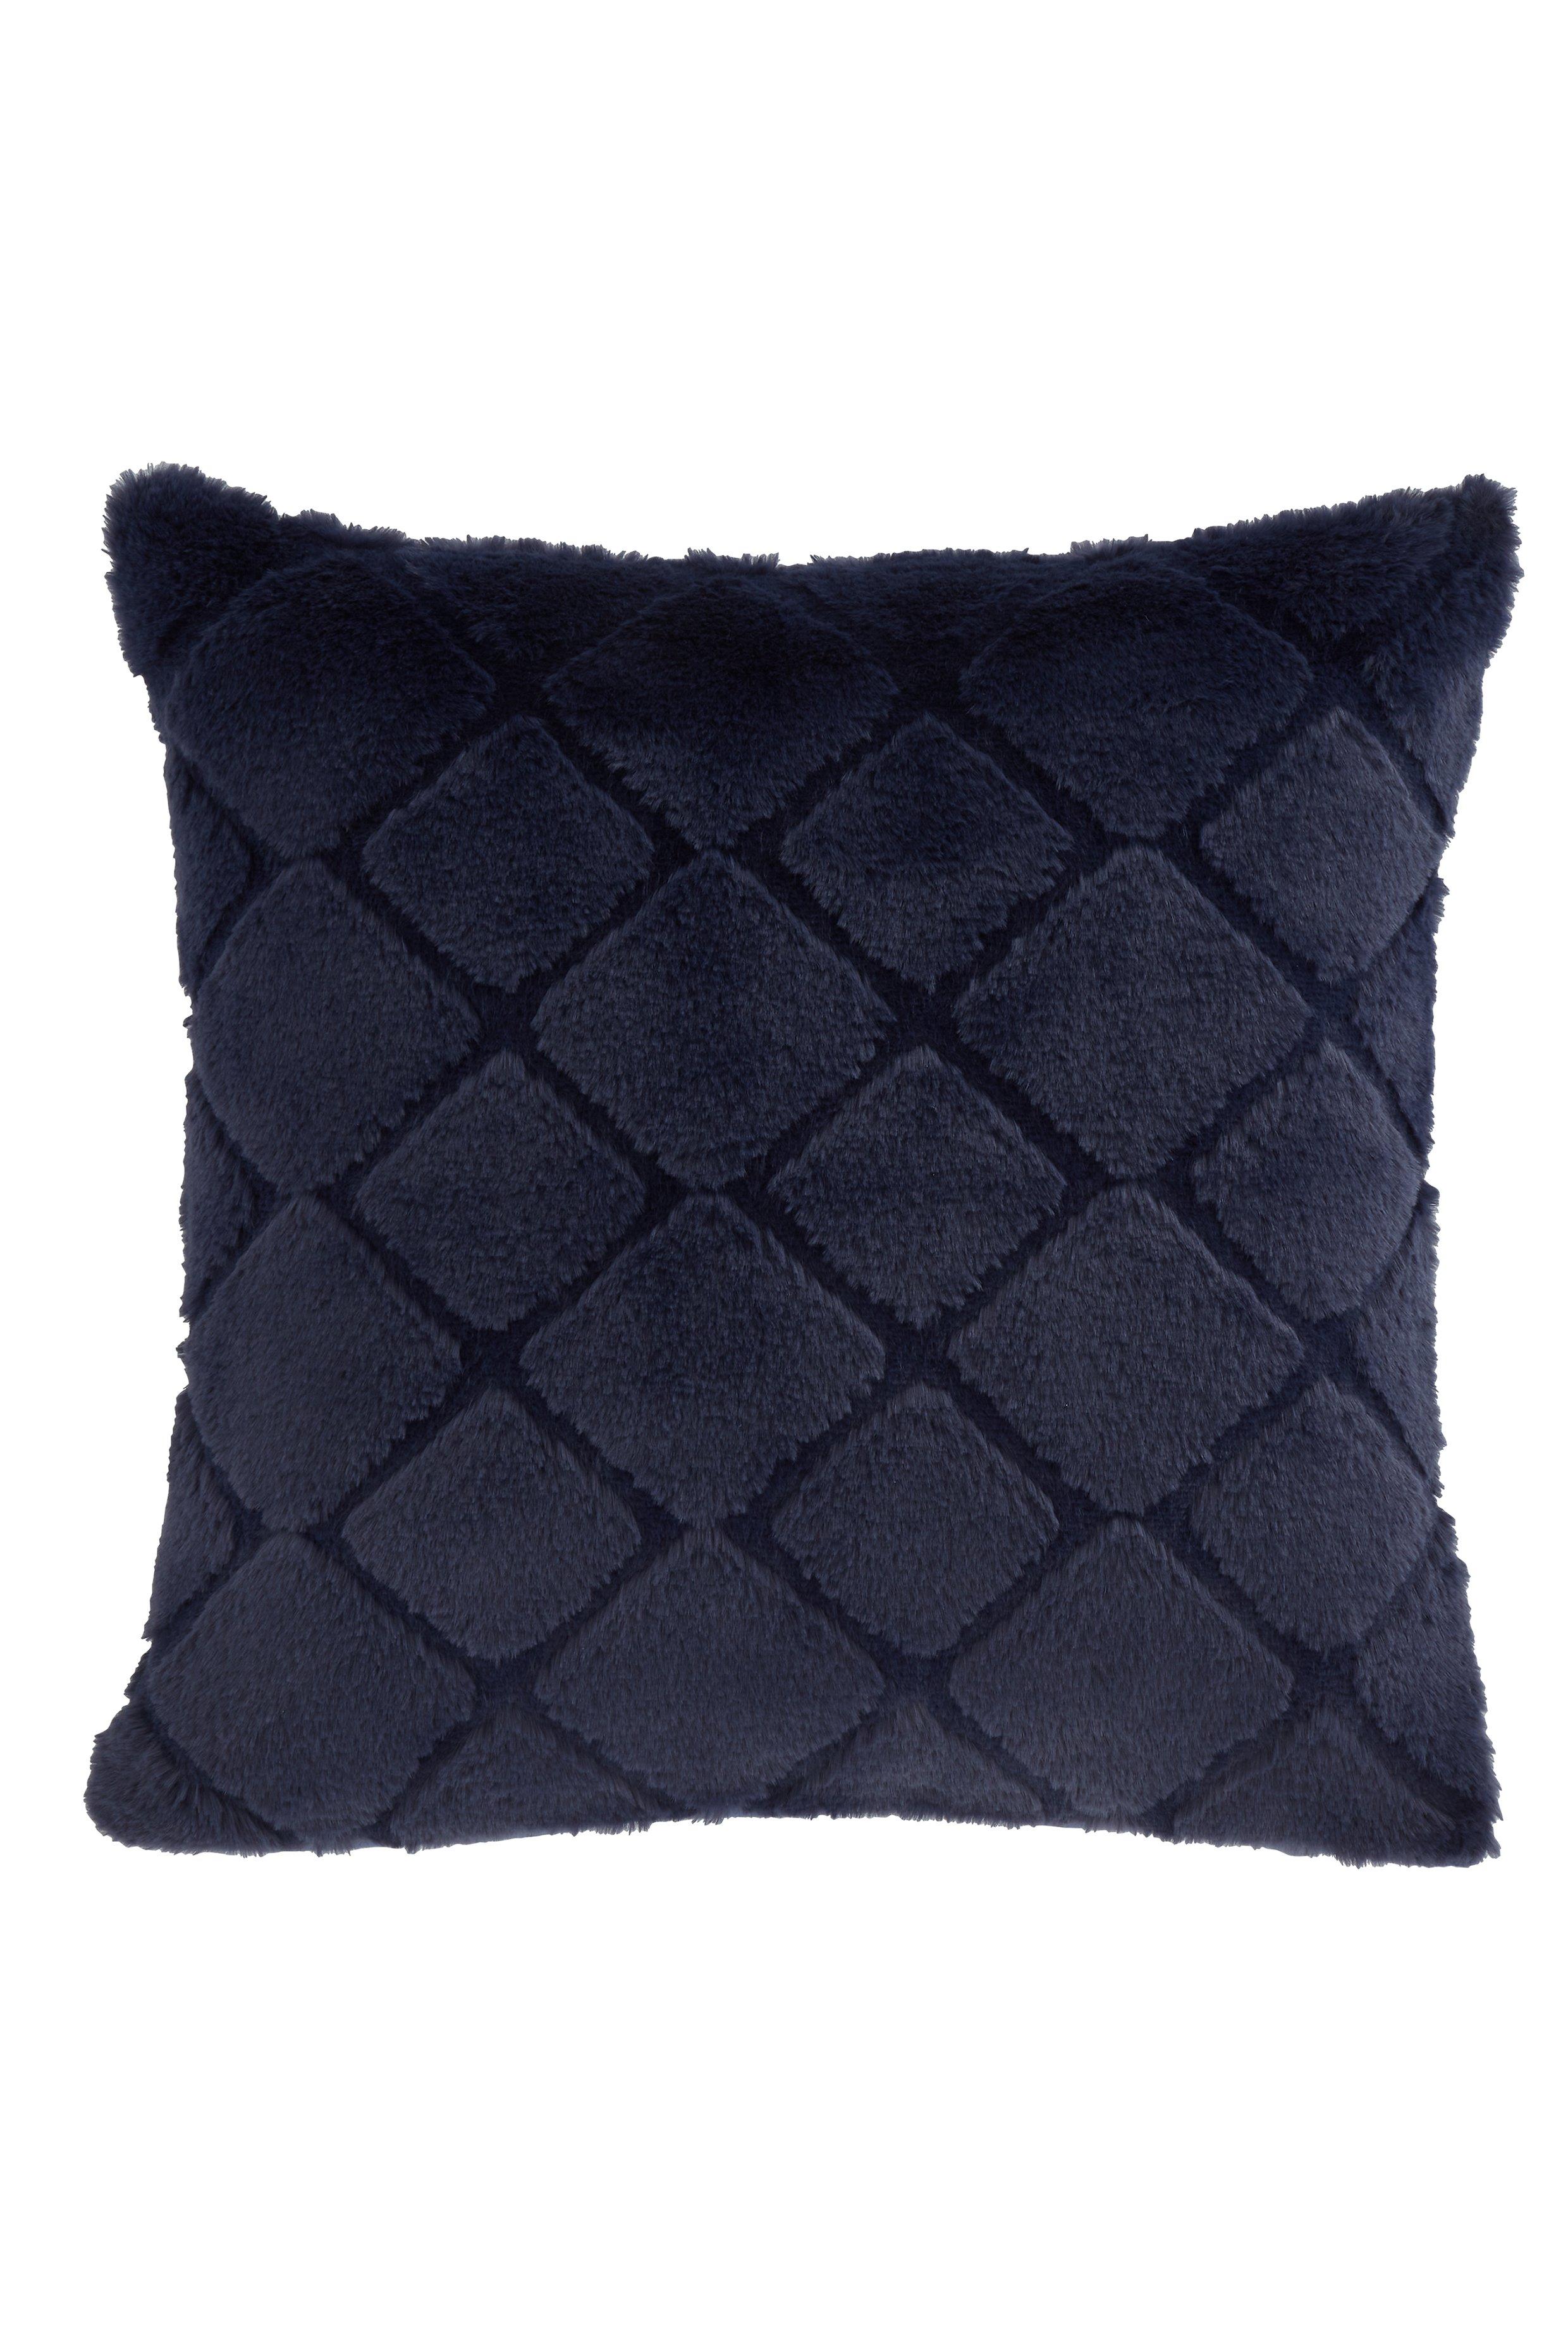 NAUTICA Premium Cotton Printed Cushion Covers -2pc 12 X18 set (logo stripe)  stripe-natural – Bianca Home